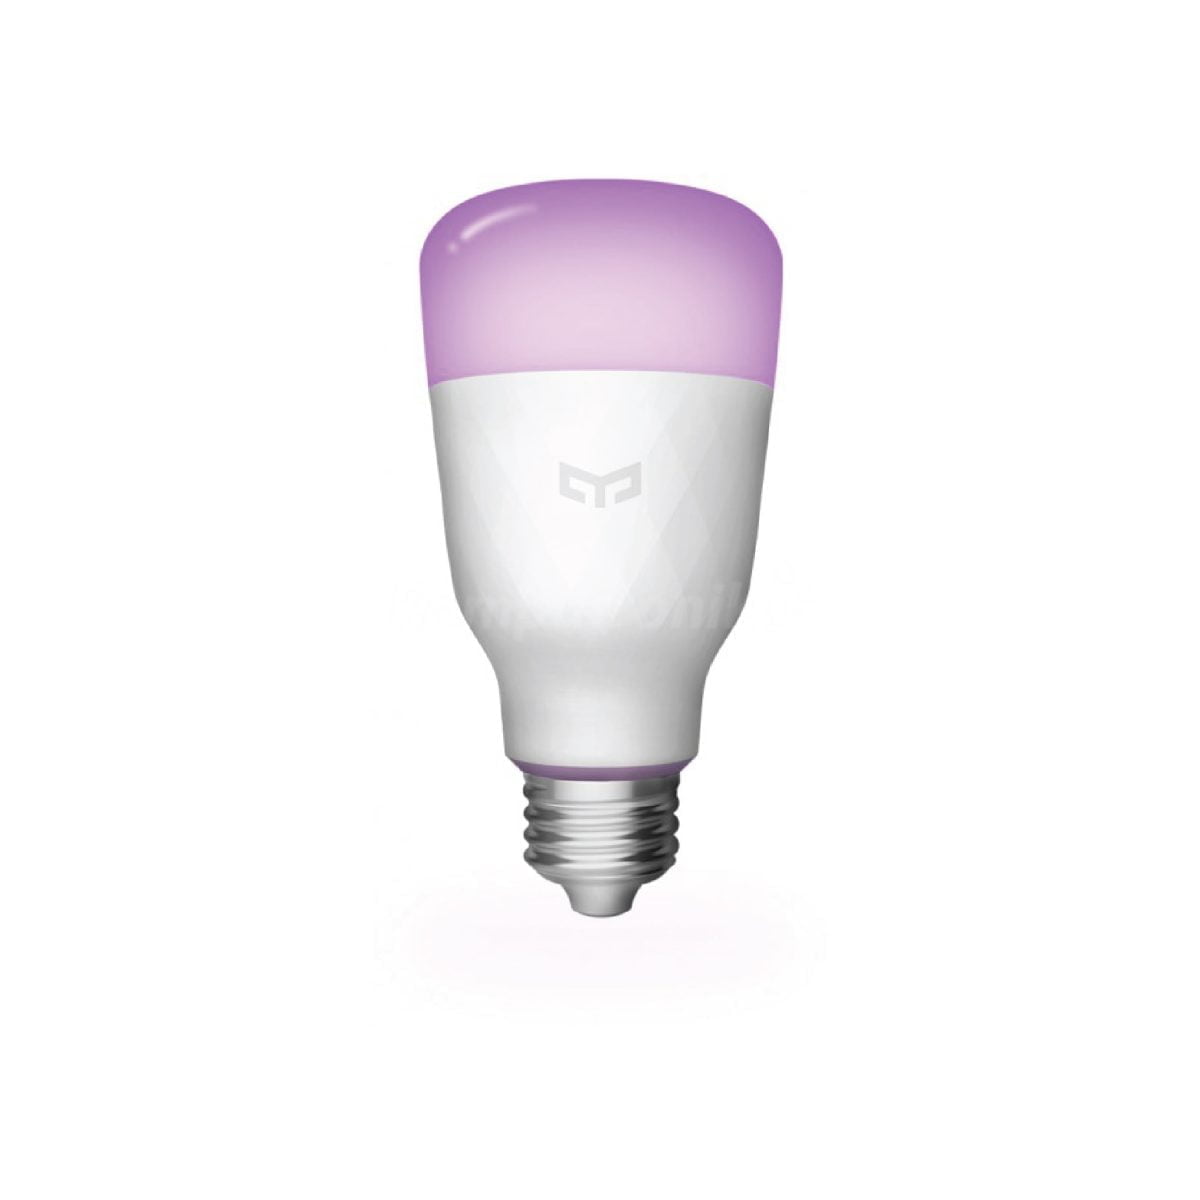 Bulb 23 شاومي سوف تسمح لك لمبة الإضاءة الذكية Yeelight 1S Rgb بإنشاء منزلك الذكي الخاص. يمكنك التحكم فيه بصوتك أو تطبيقك وتحديد درجة الحرارة والقوة التي يجب أن يلمع بها. التدفق الضوئي: 800 لومن درجة حرارة اللون: 1700 K-6500K حامل المصباح: E27 الطاقة المقدرة: 8.5 واط &Nbsp; 16 مليون لون مع تمكين Wifi والتحكم الصوتي والتحكم في التطبيقات ومزامنة الموسيقى &Lt;Img Class=&Quot;Alignnone Wp-Image-8061 Size-Full&Quot; Src=&Quot;Https://Lablaab.com/Wp-Content/Uploads/2020/04/Bulb-27-2-Scaled.jpg&Quot; Alt=&Quot;&Quot; Width=&Quot;2560&Quot; Height=&Quot;357&Quot;&Gt; &Nbsp; لمبة يلايت الذكية 1S (ألوان)